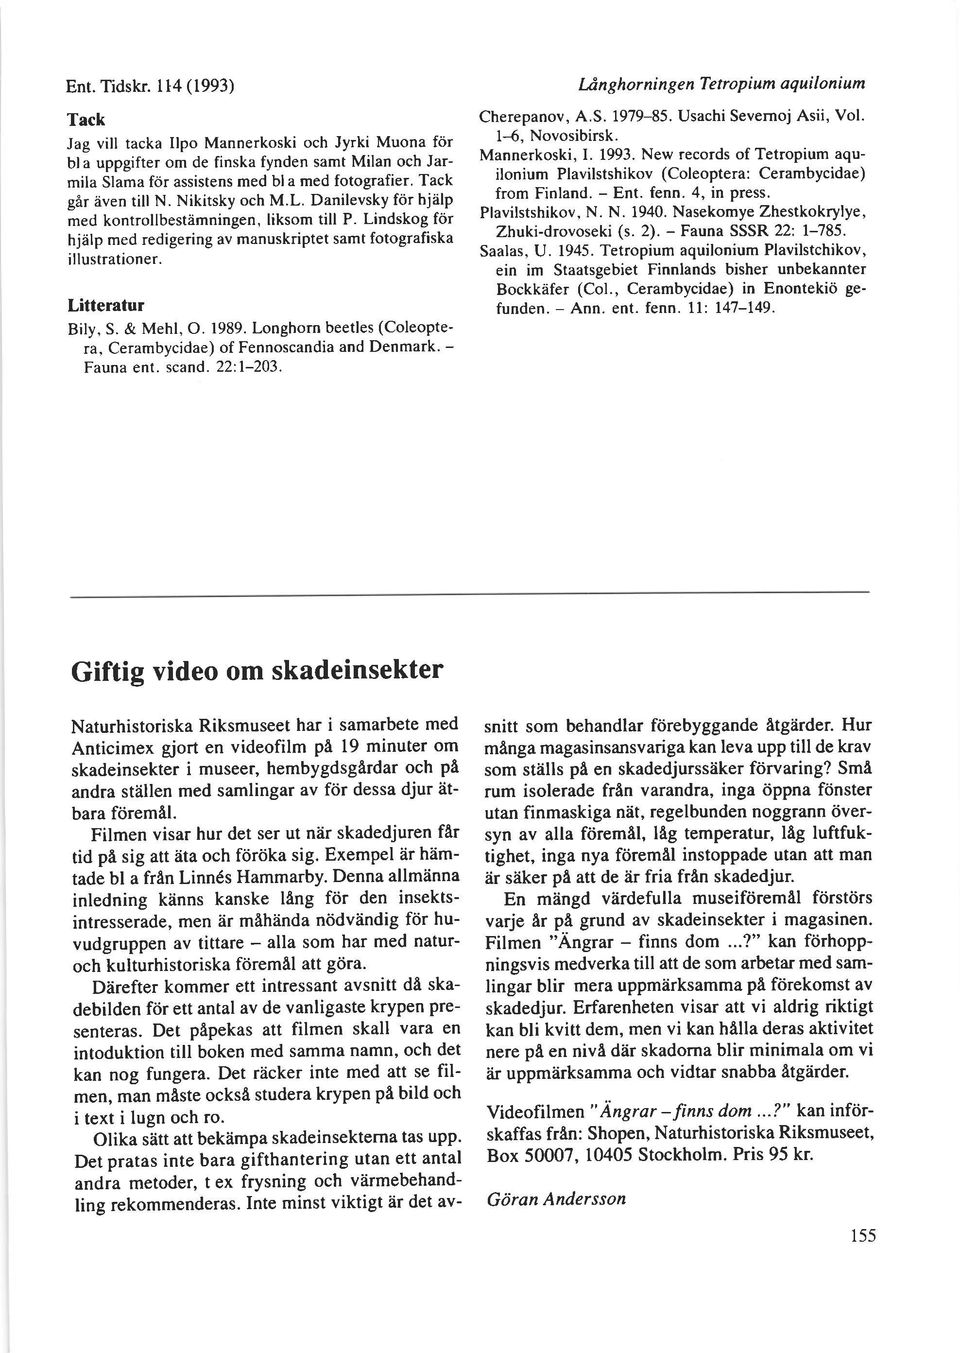 Litteratur Bily, S. & Mehl, O. 1989. Longhorn beetles (Coleoptera, Cerambycidae) of Fennoscandia and Denmark. - Fauna ent. scand. 22:l-203.